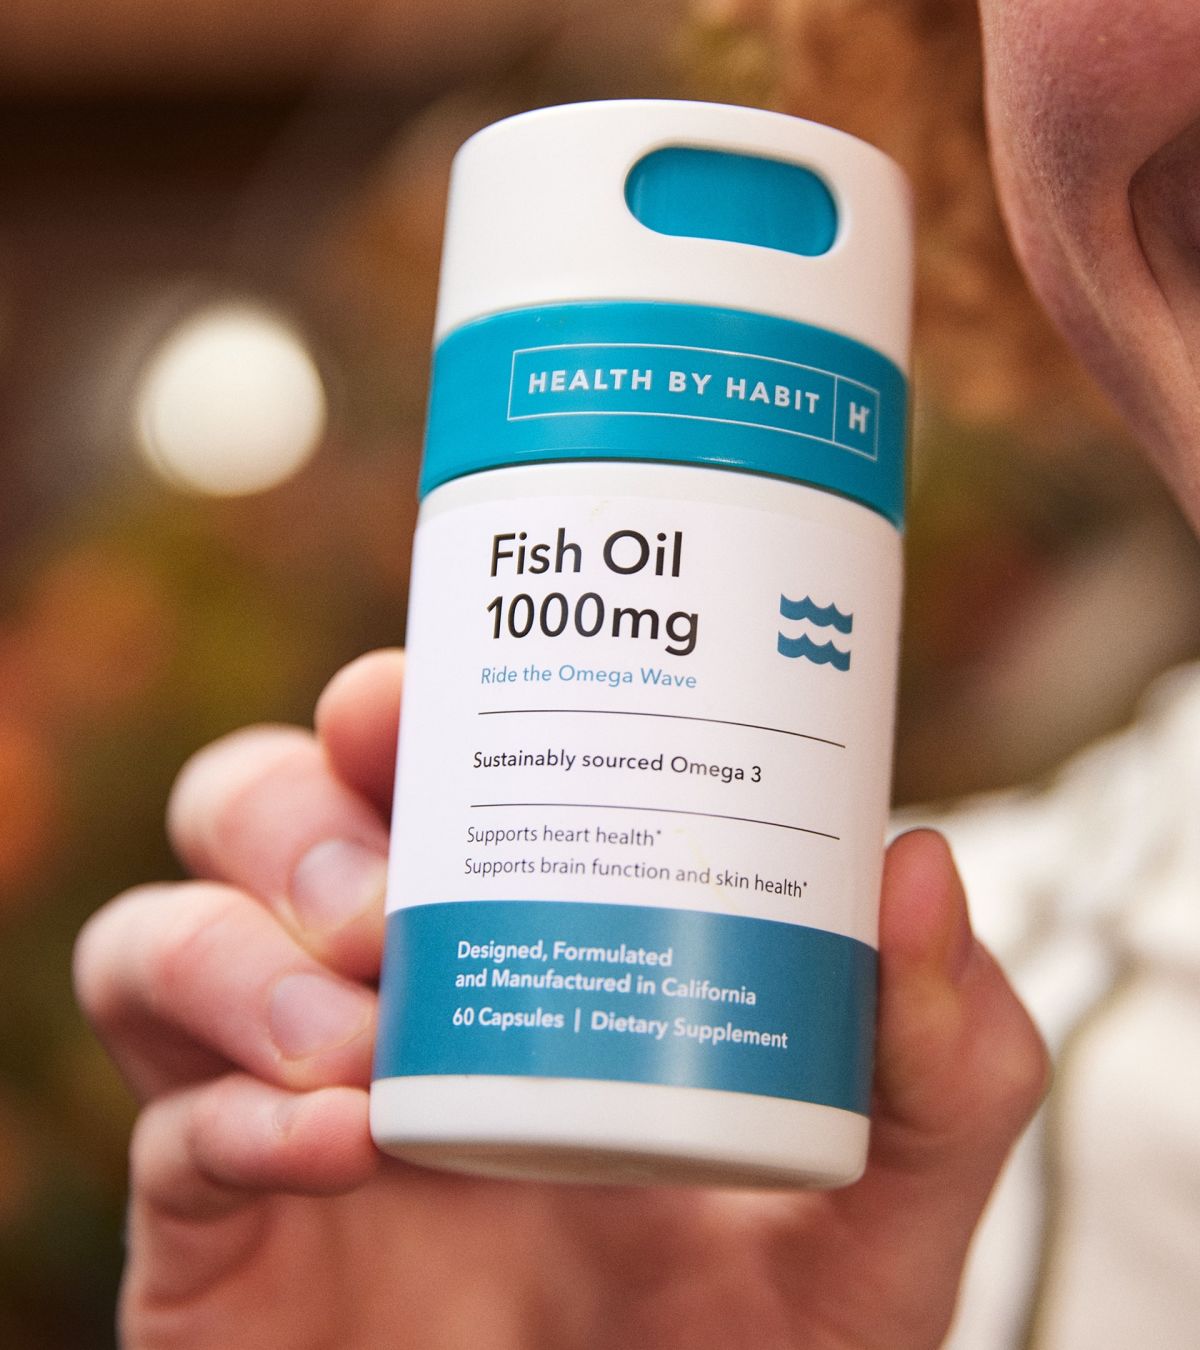 HealthByHabit - Fish Oil Ingredients